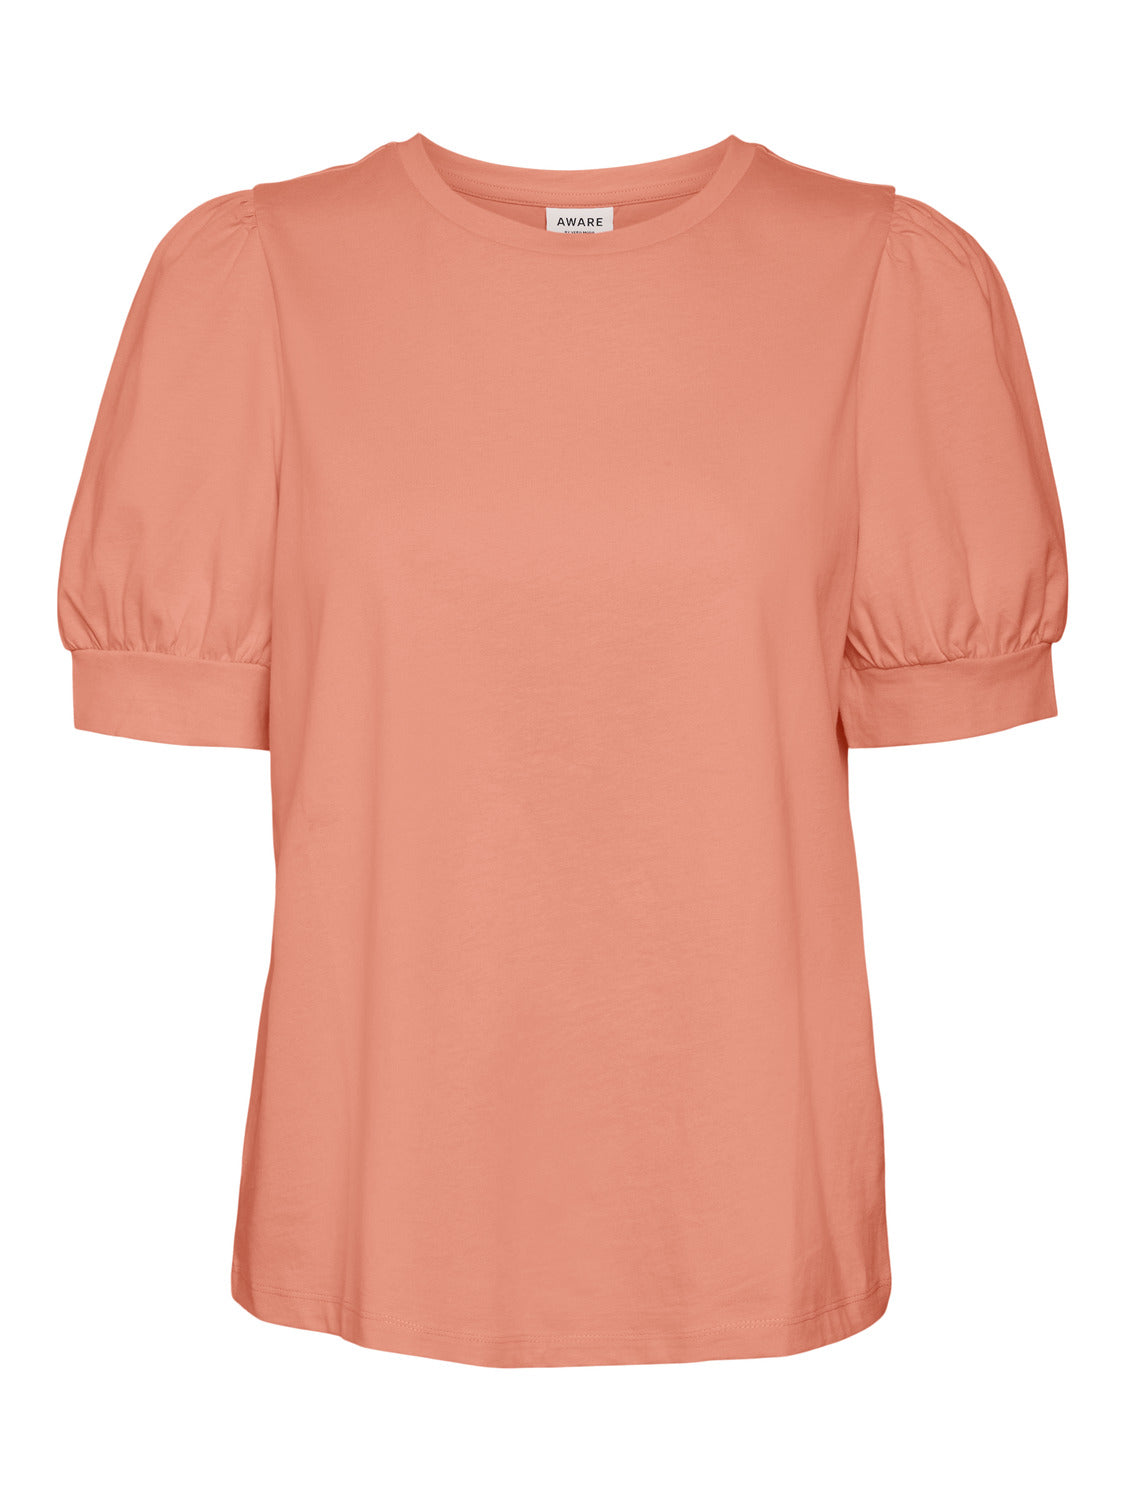 VMKERRY T-Shirts & Tops - Georgia Peach